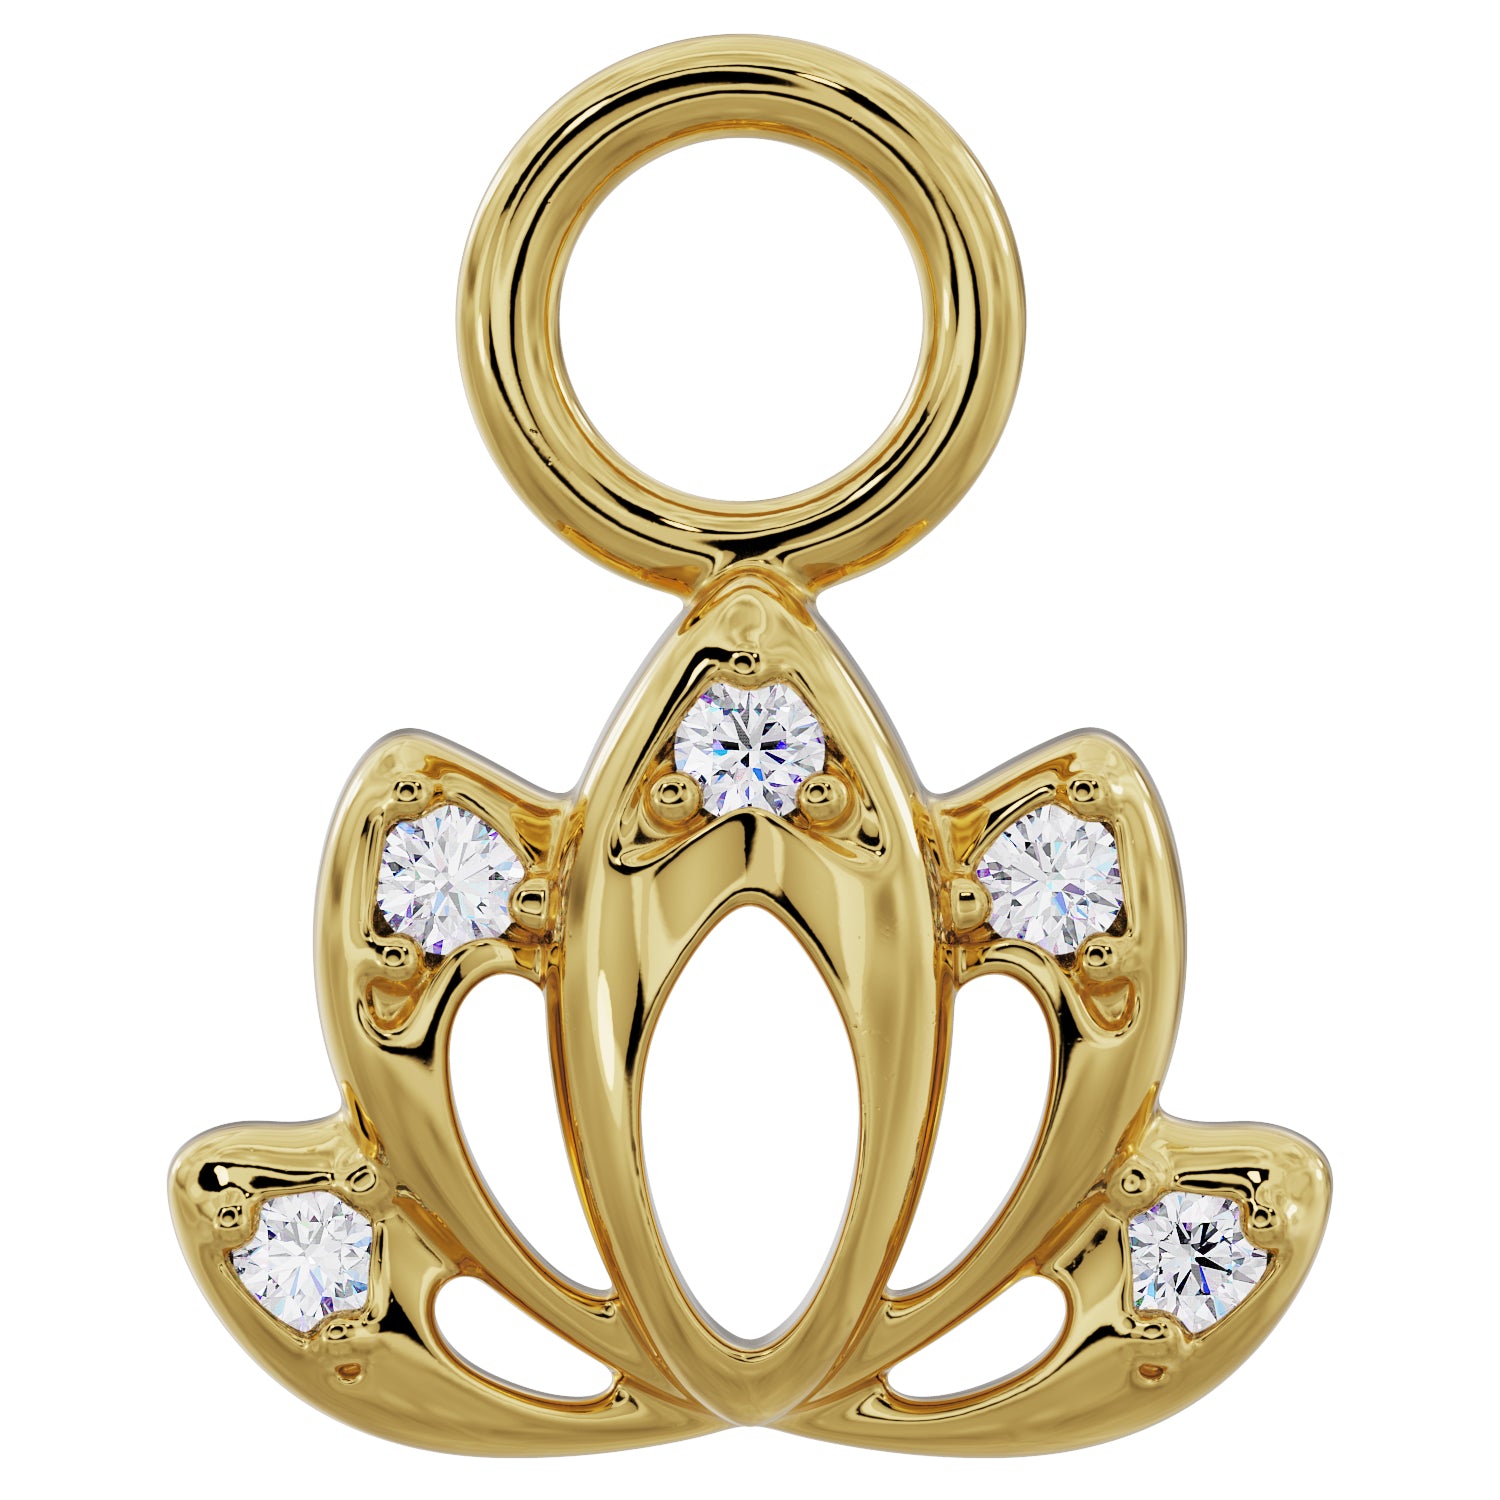 Lotus Diamond Charm Accessory for Piercing Jewelry-14K Yellow Gold